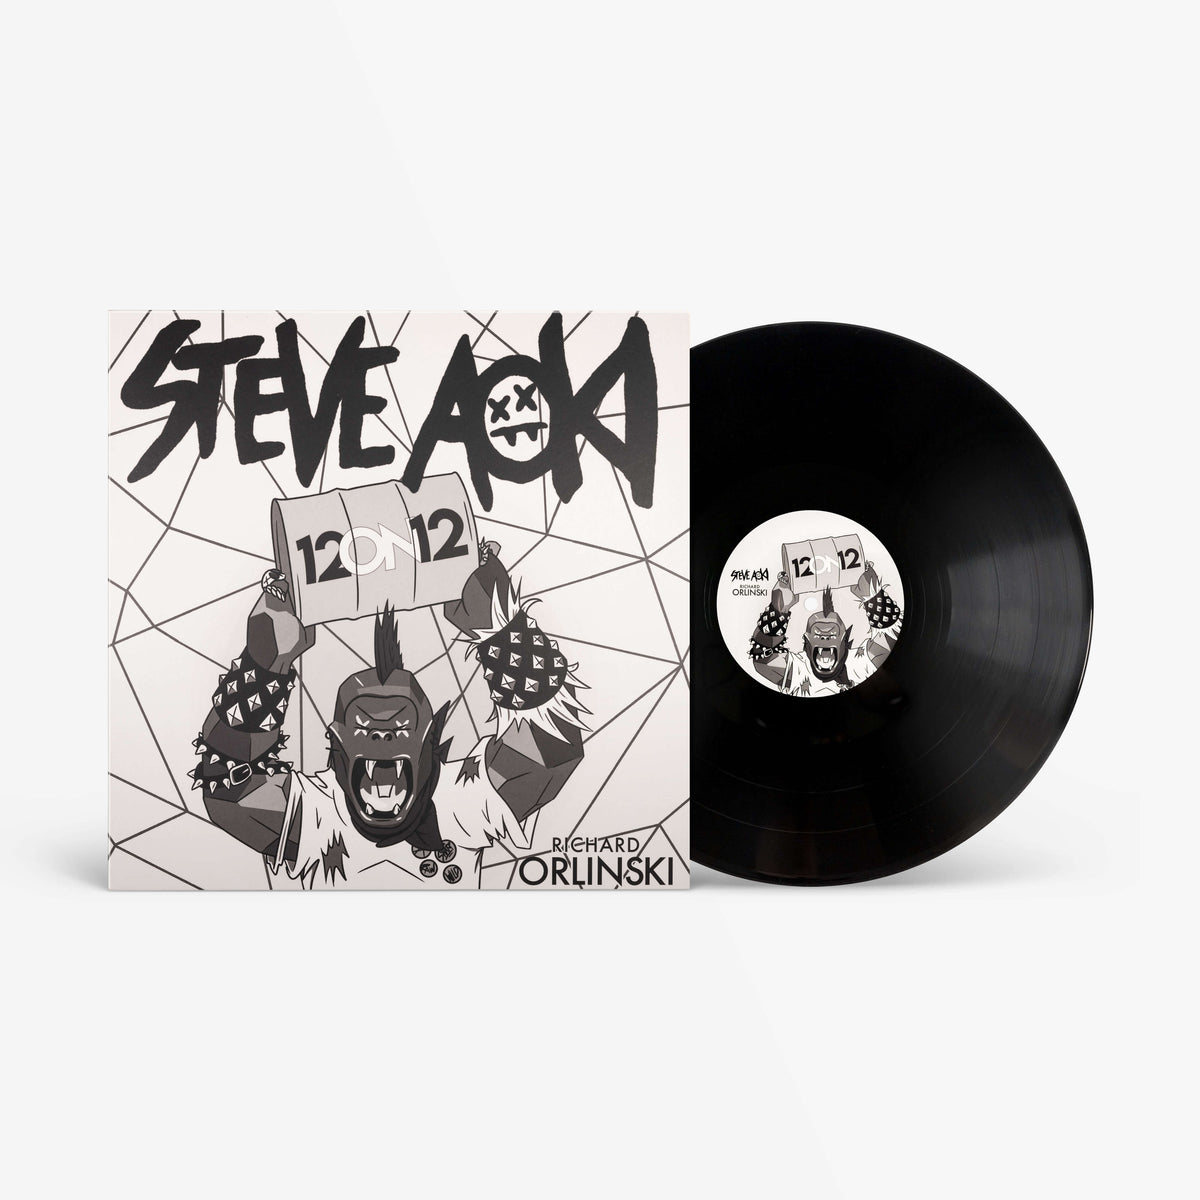 Steve Aoki x Richard Orlinski Vinyl Record, Year Zero - 12on12